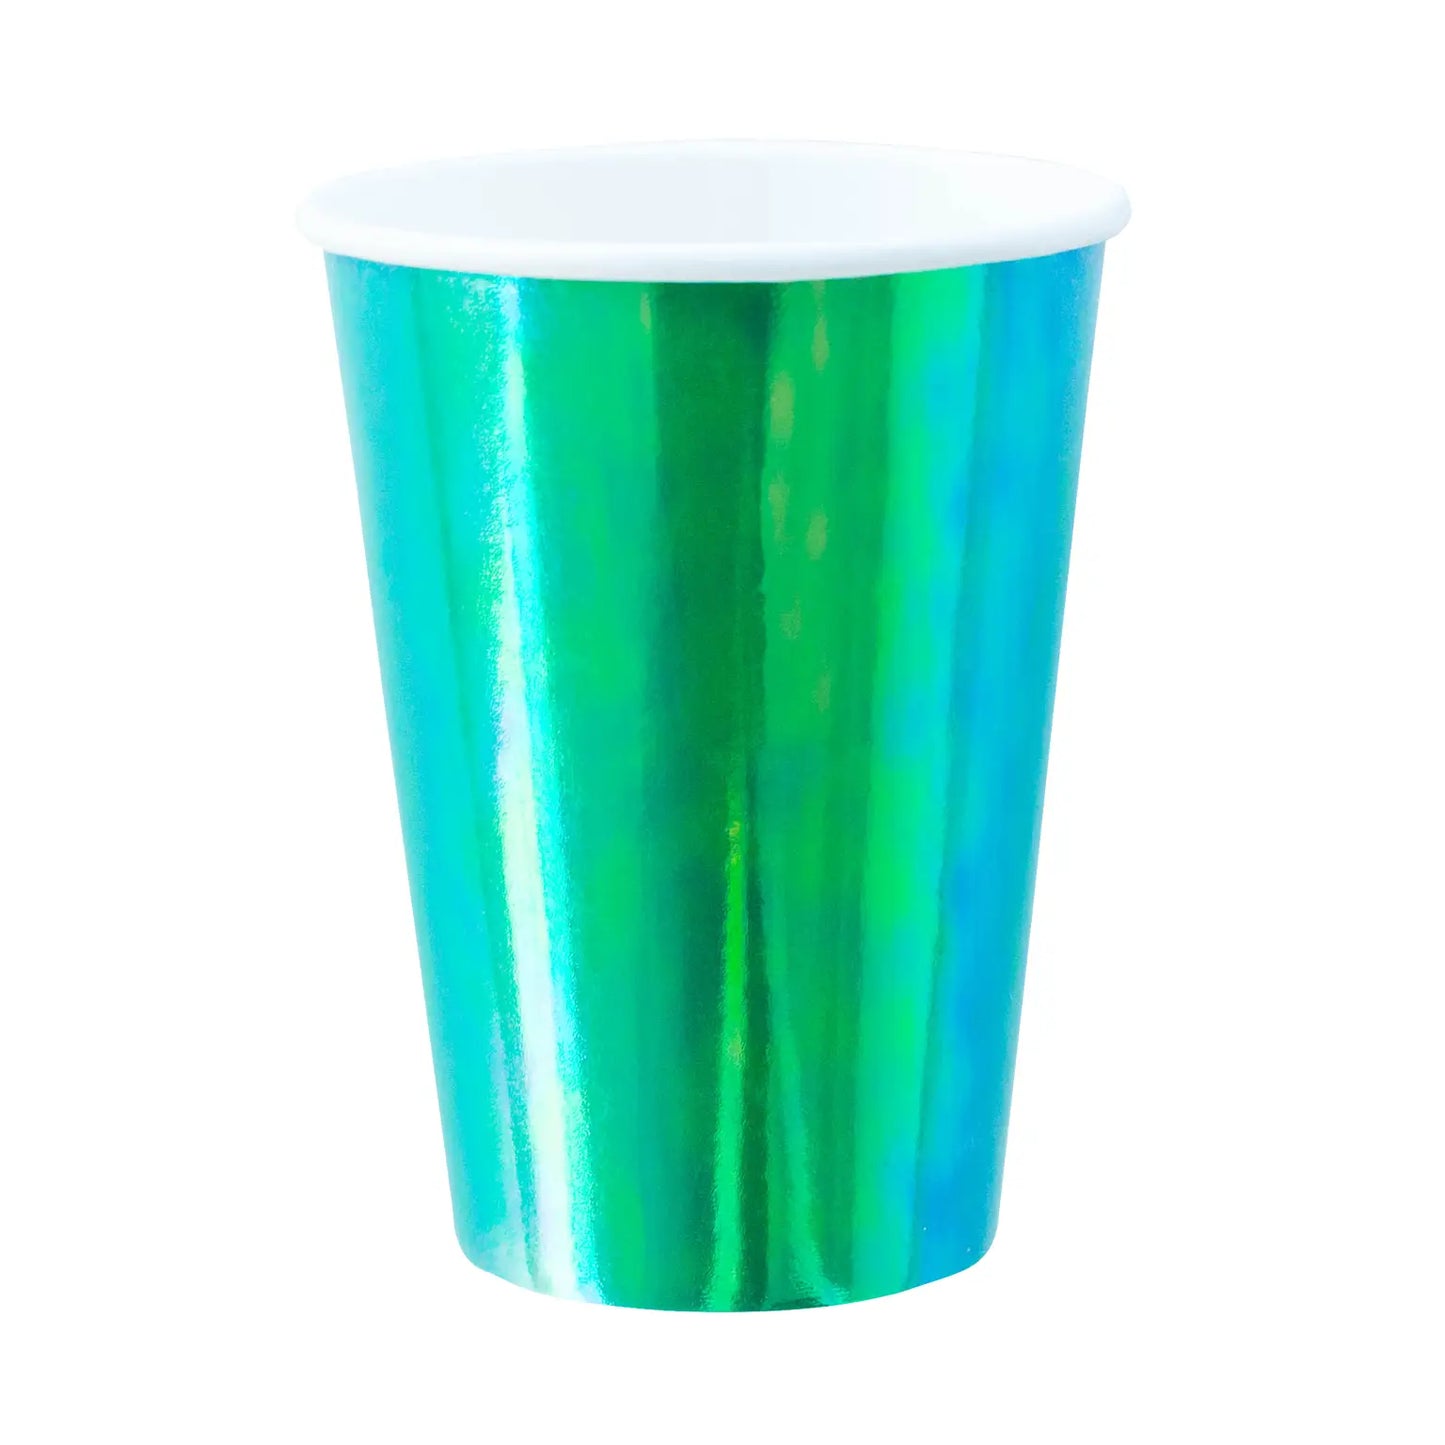 Posh Emerald City 12 oz Cups - 8 Pk.